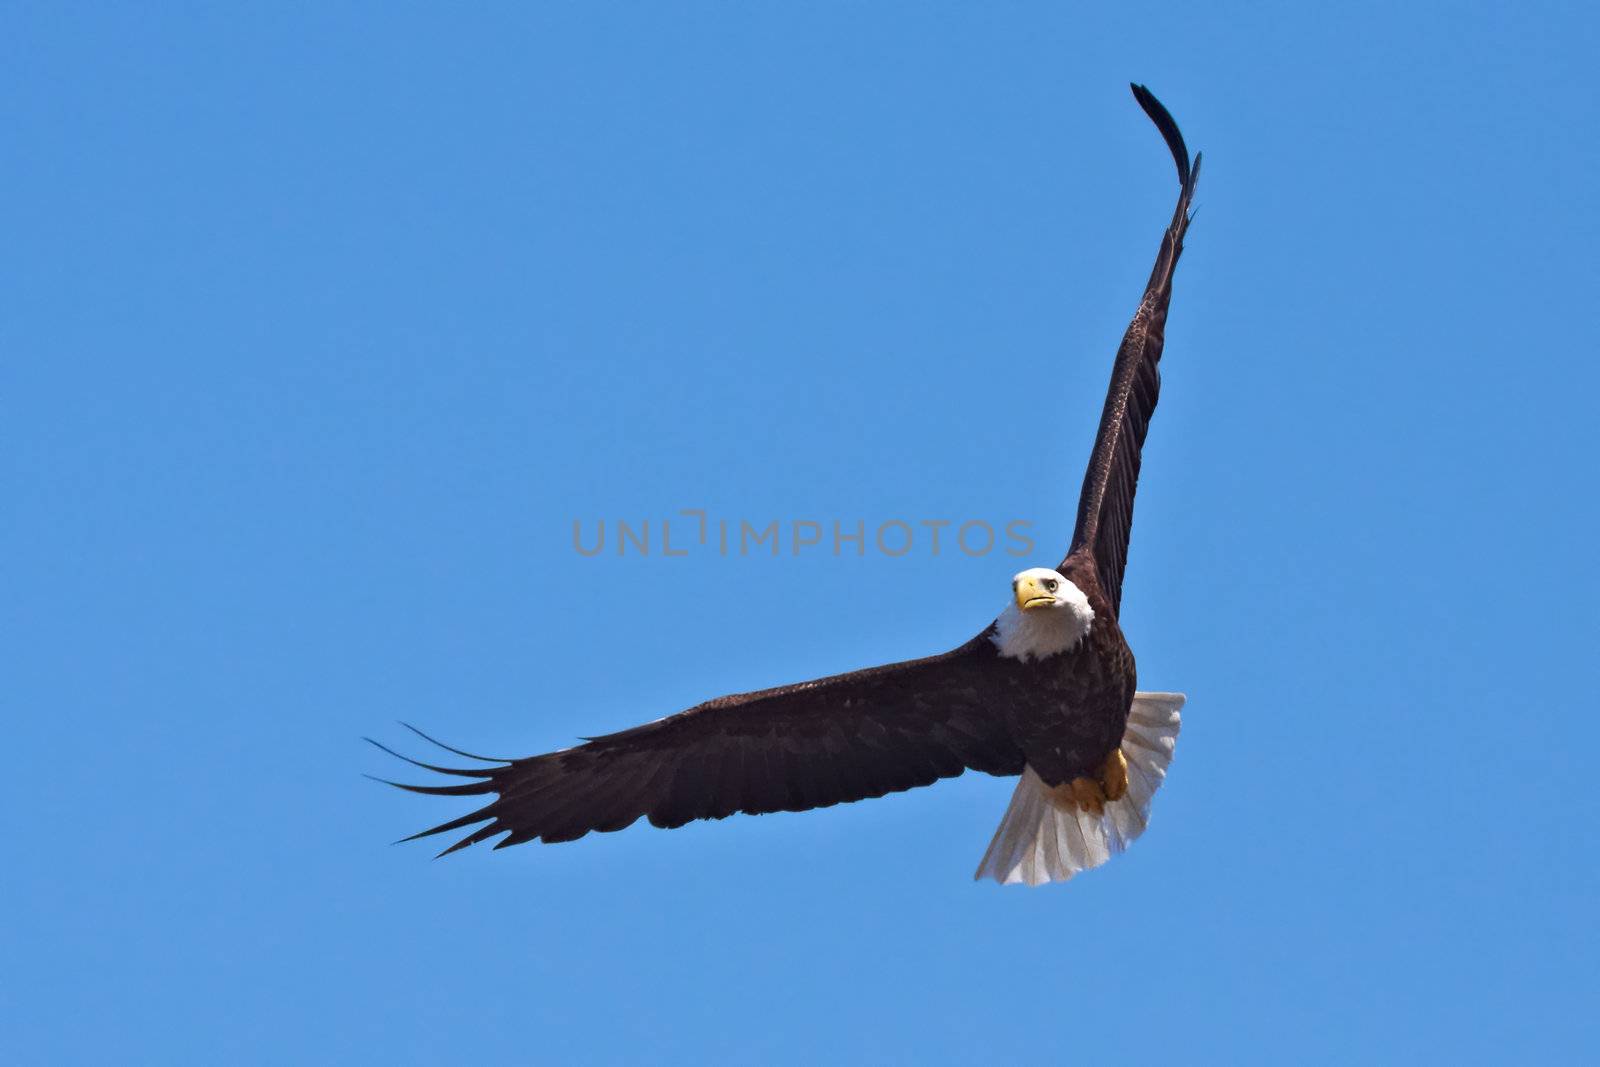 American Bald Eagle in Flight; Blue Sky on Background